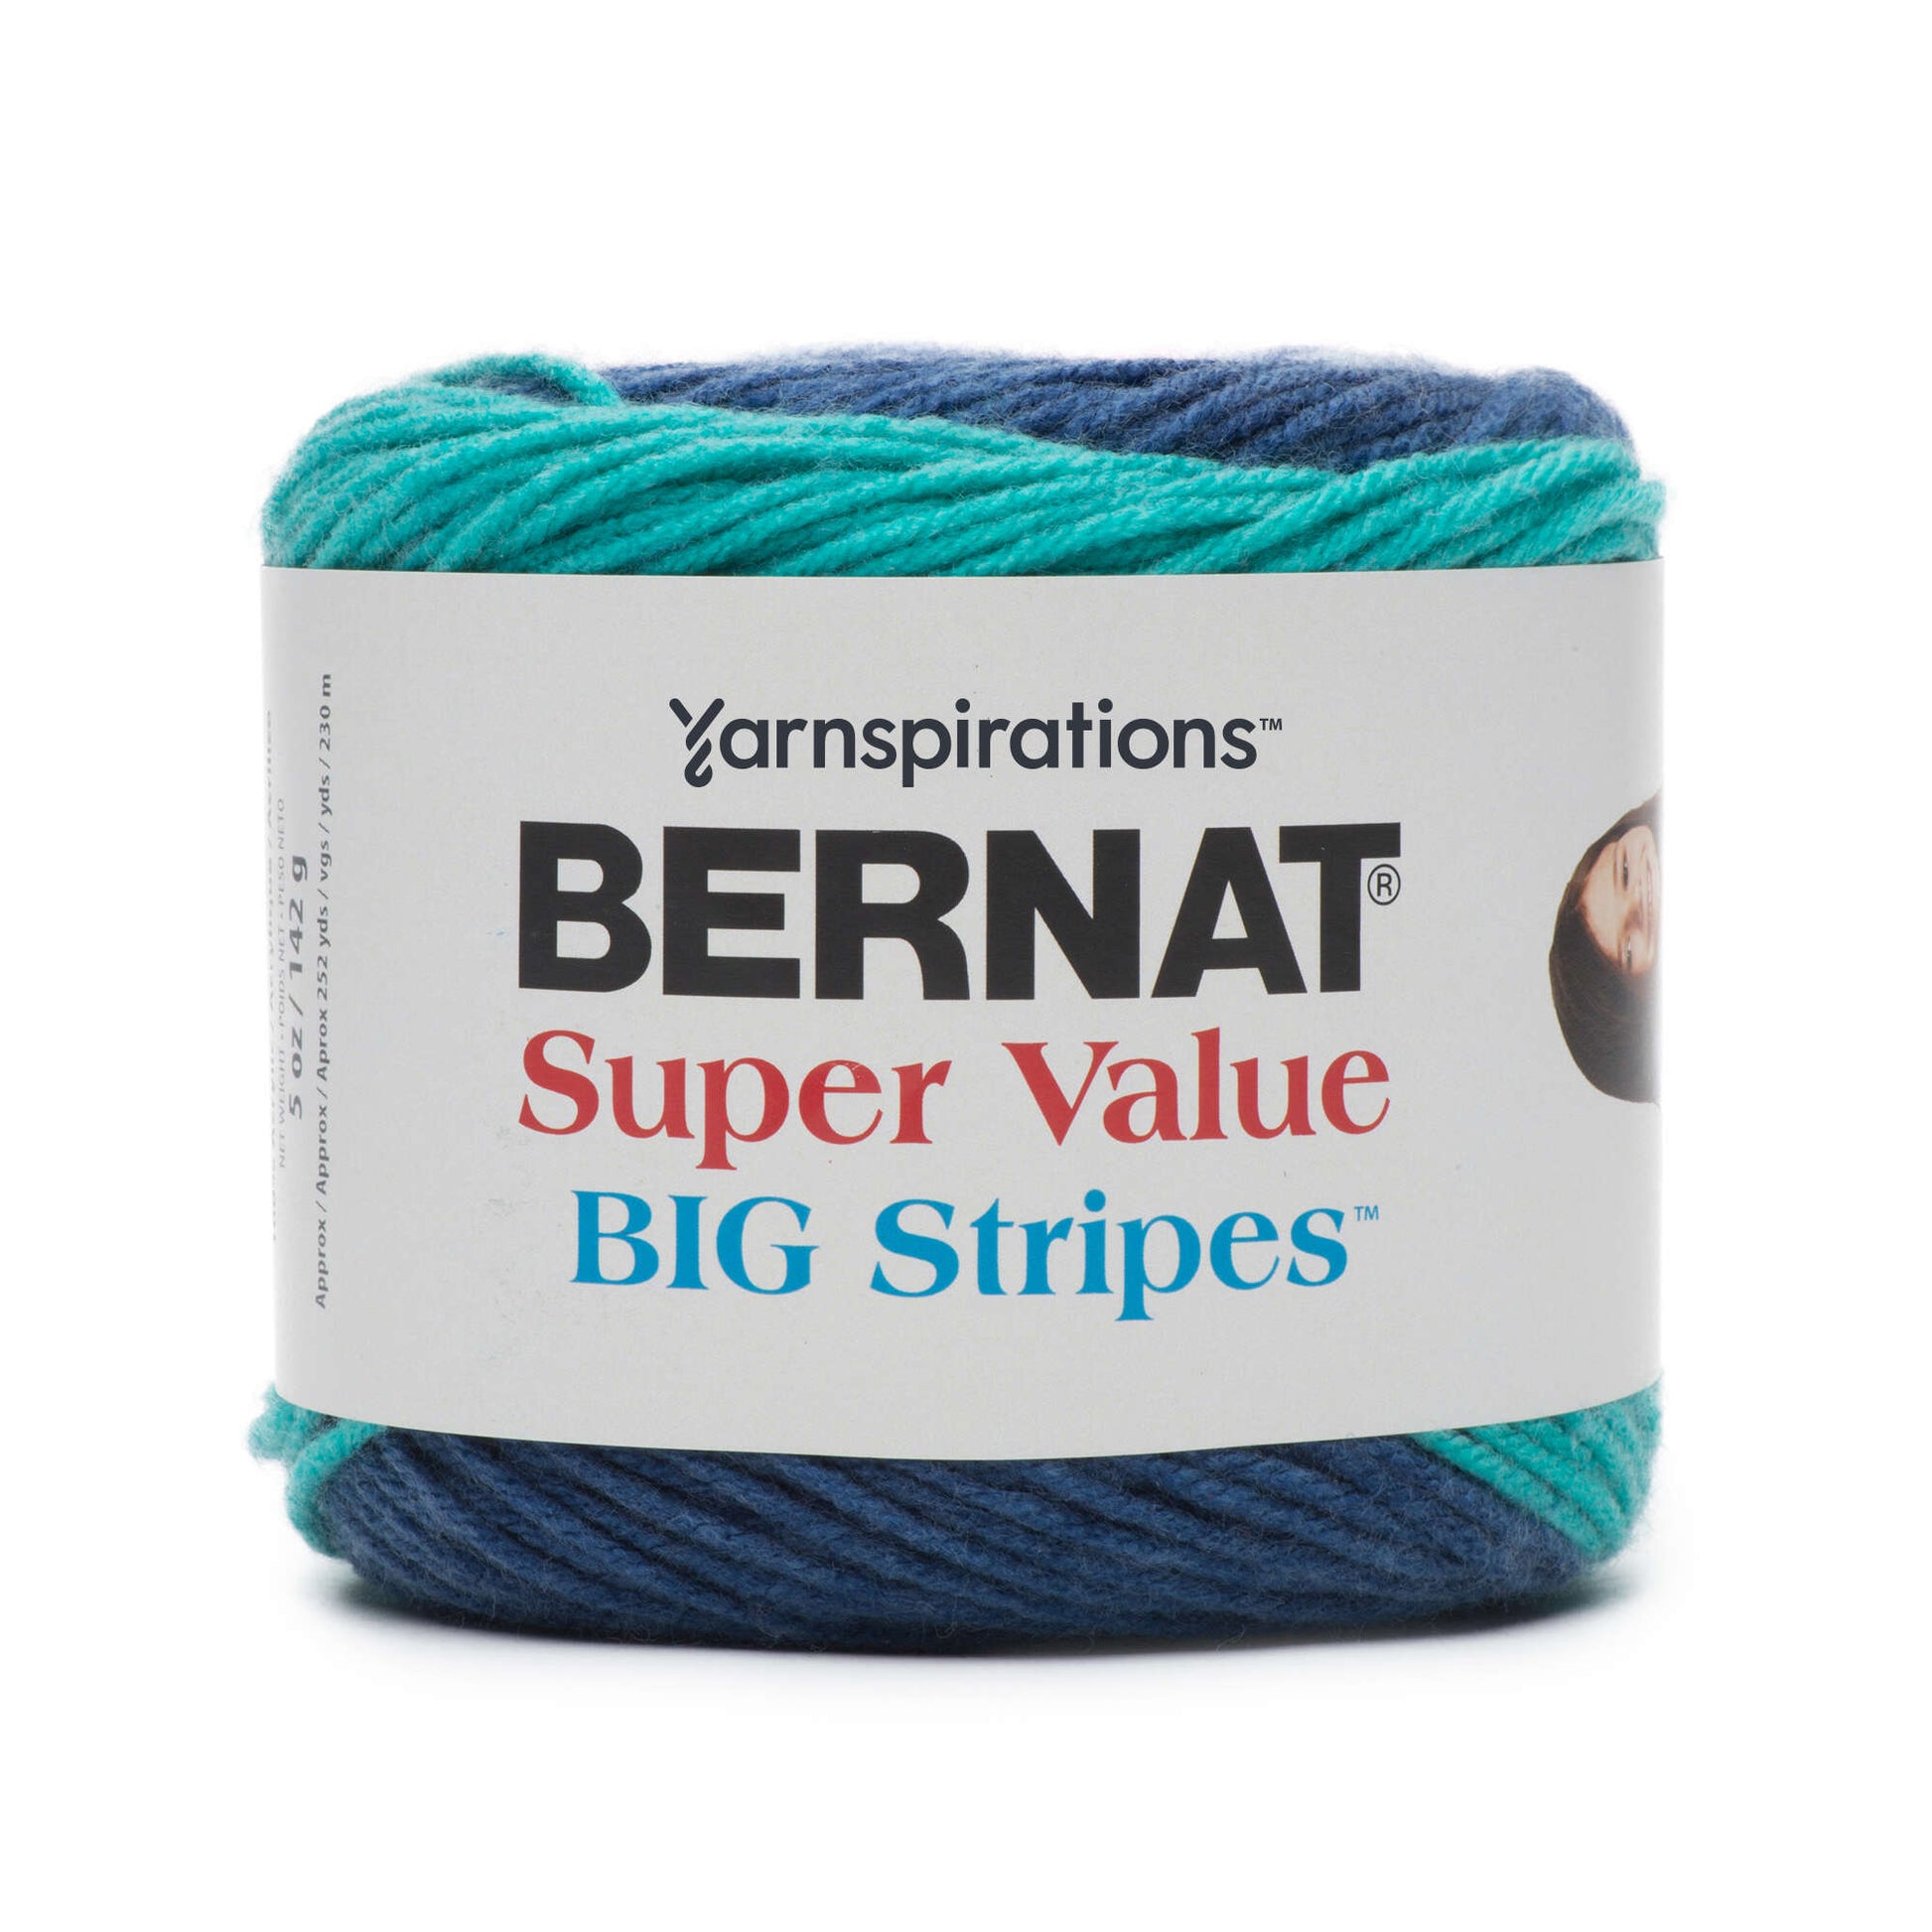 Bernat Super Value Big Stripes Yarn - Discontinued Shades